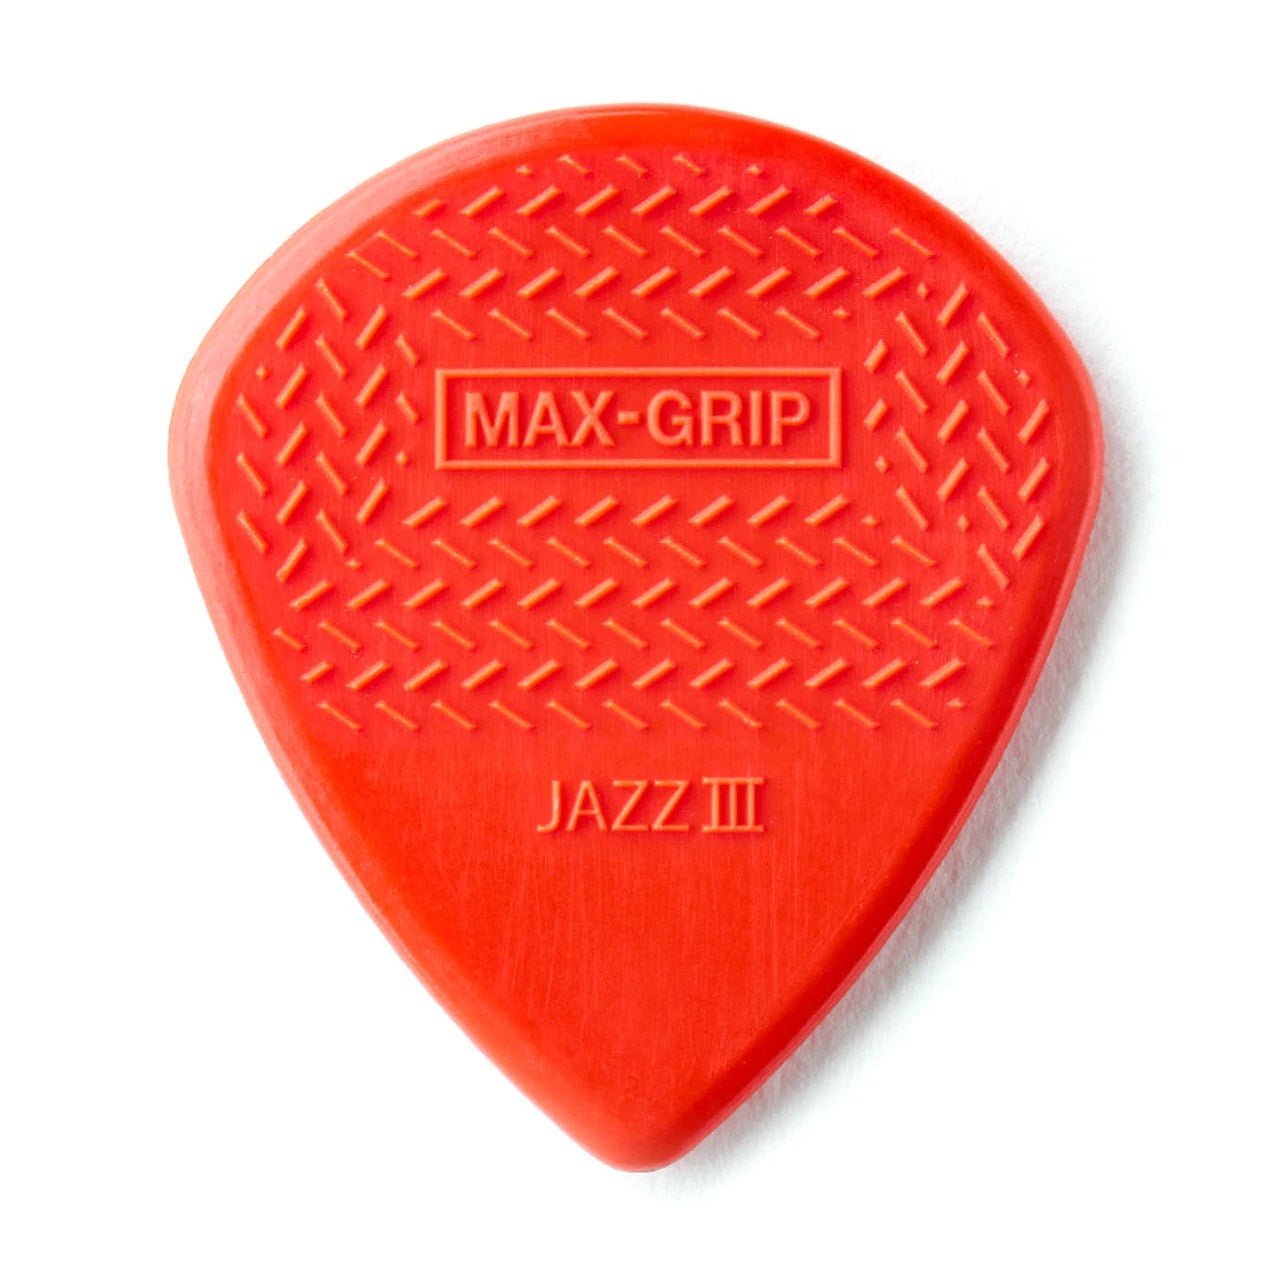 Dunlop Max Grip Nylon Jazz III Picks